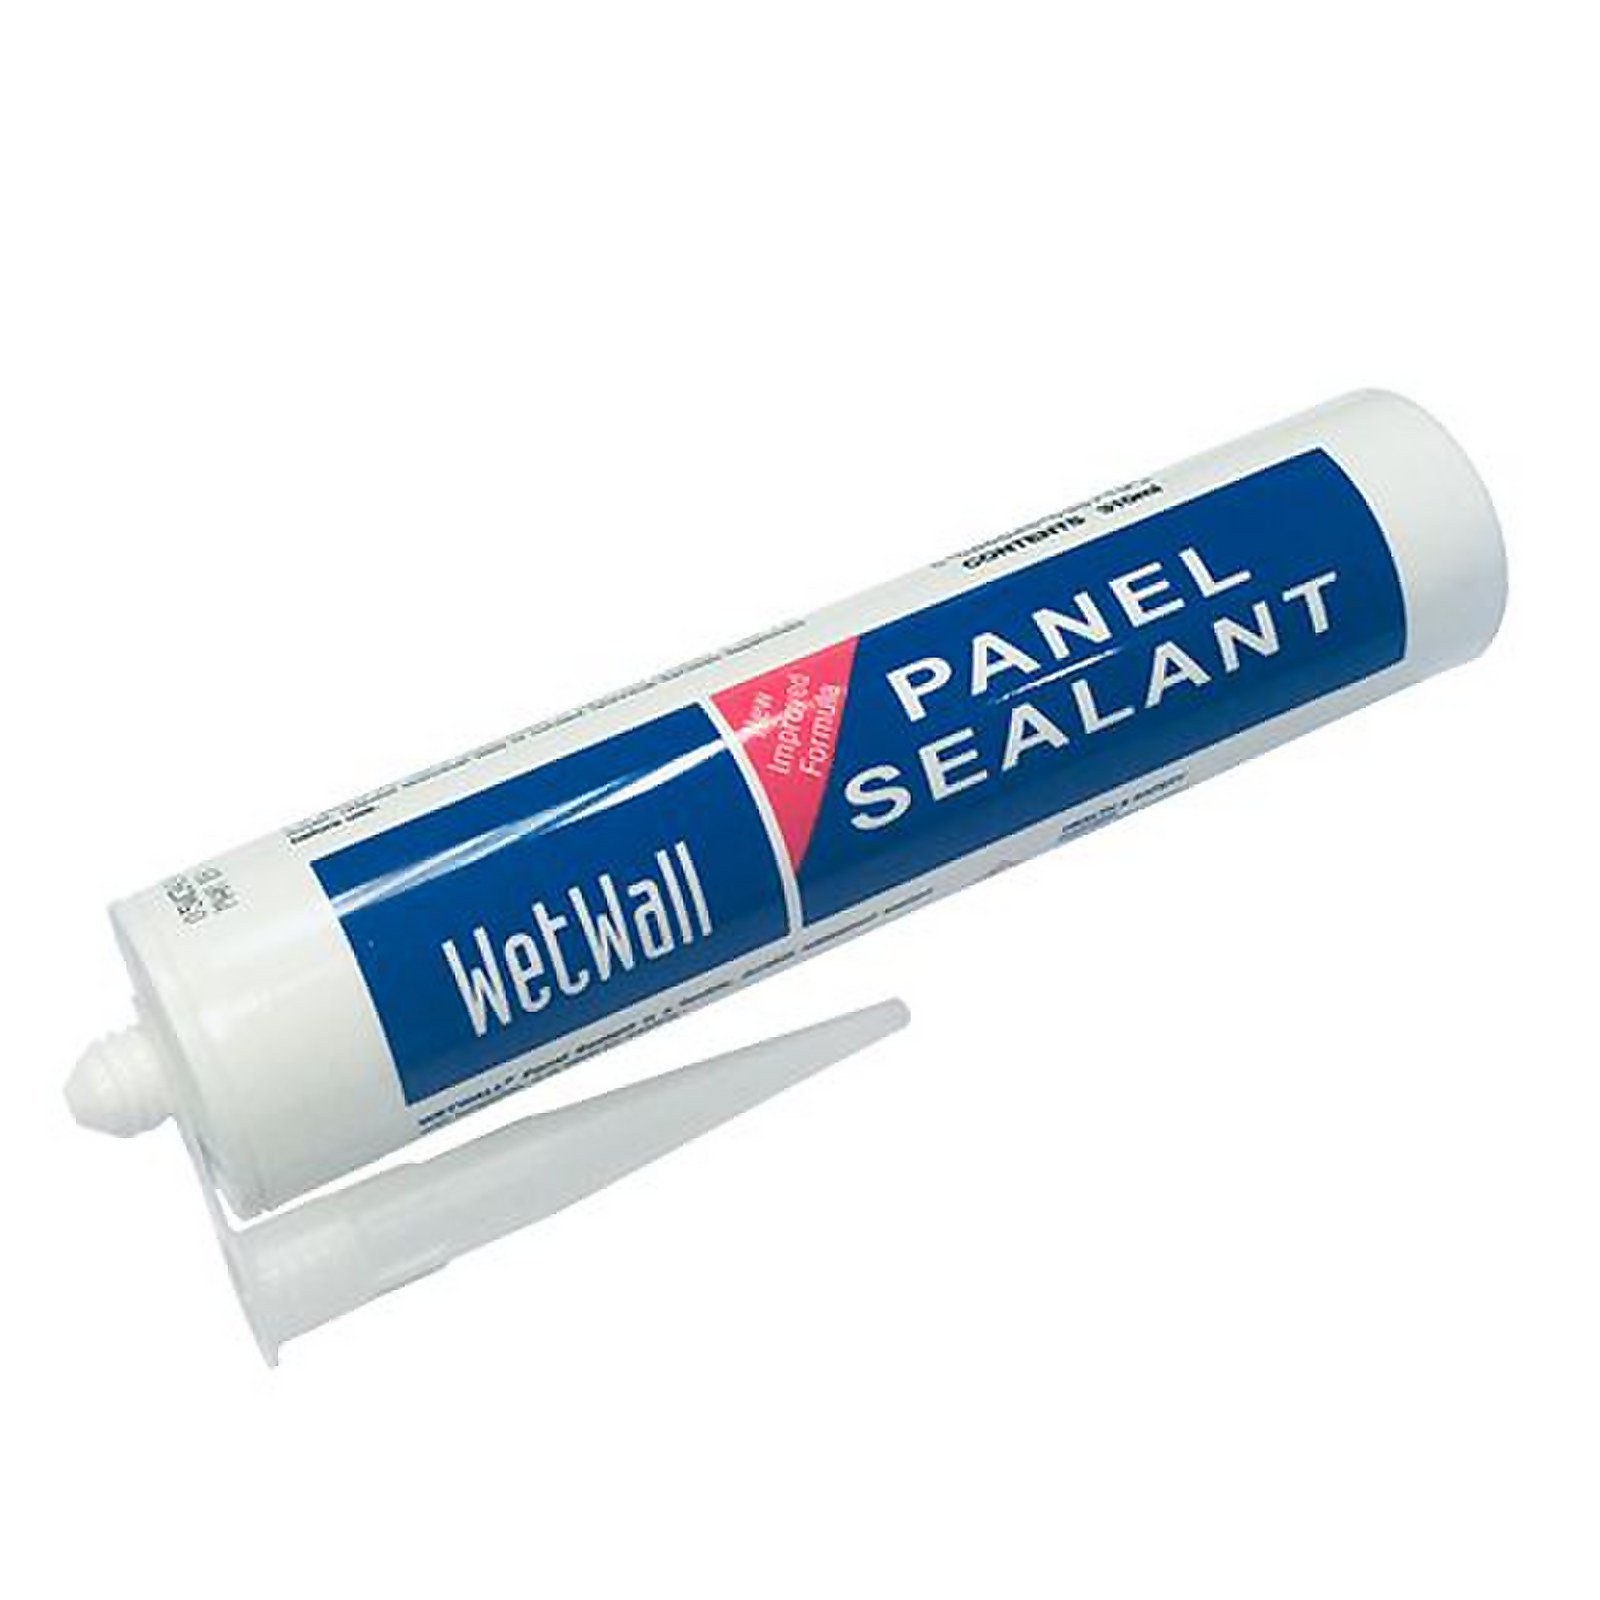 Photo of Wetwall Panel Sealant - White 310ml